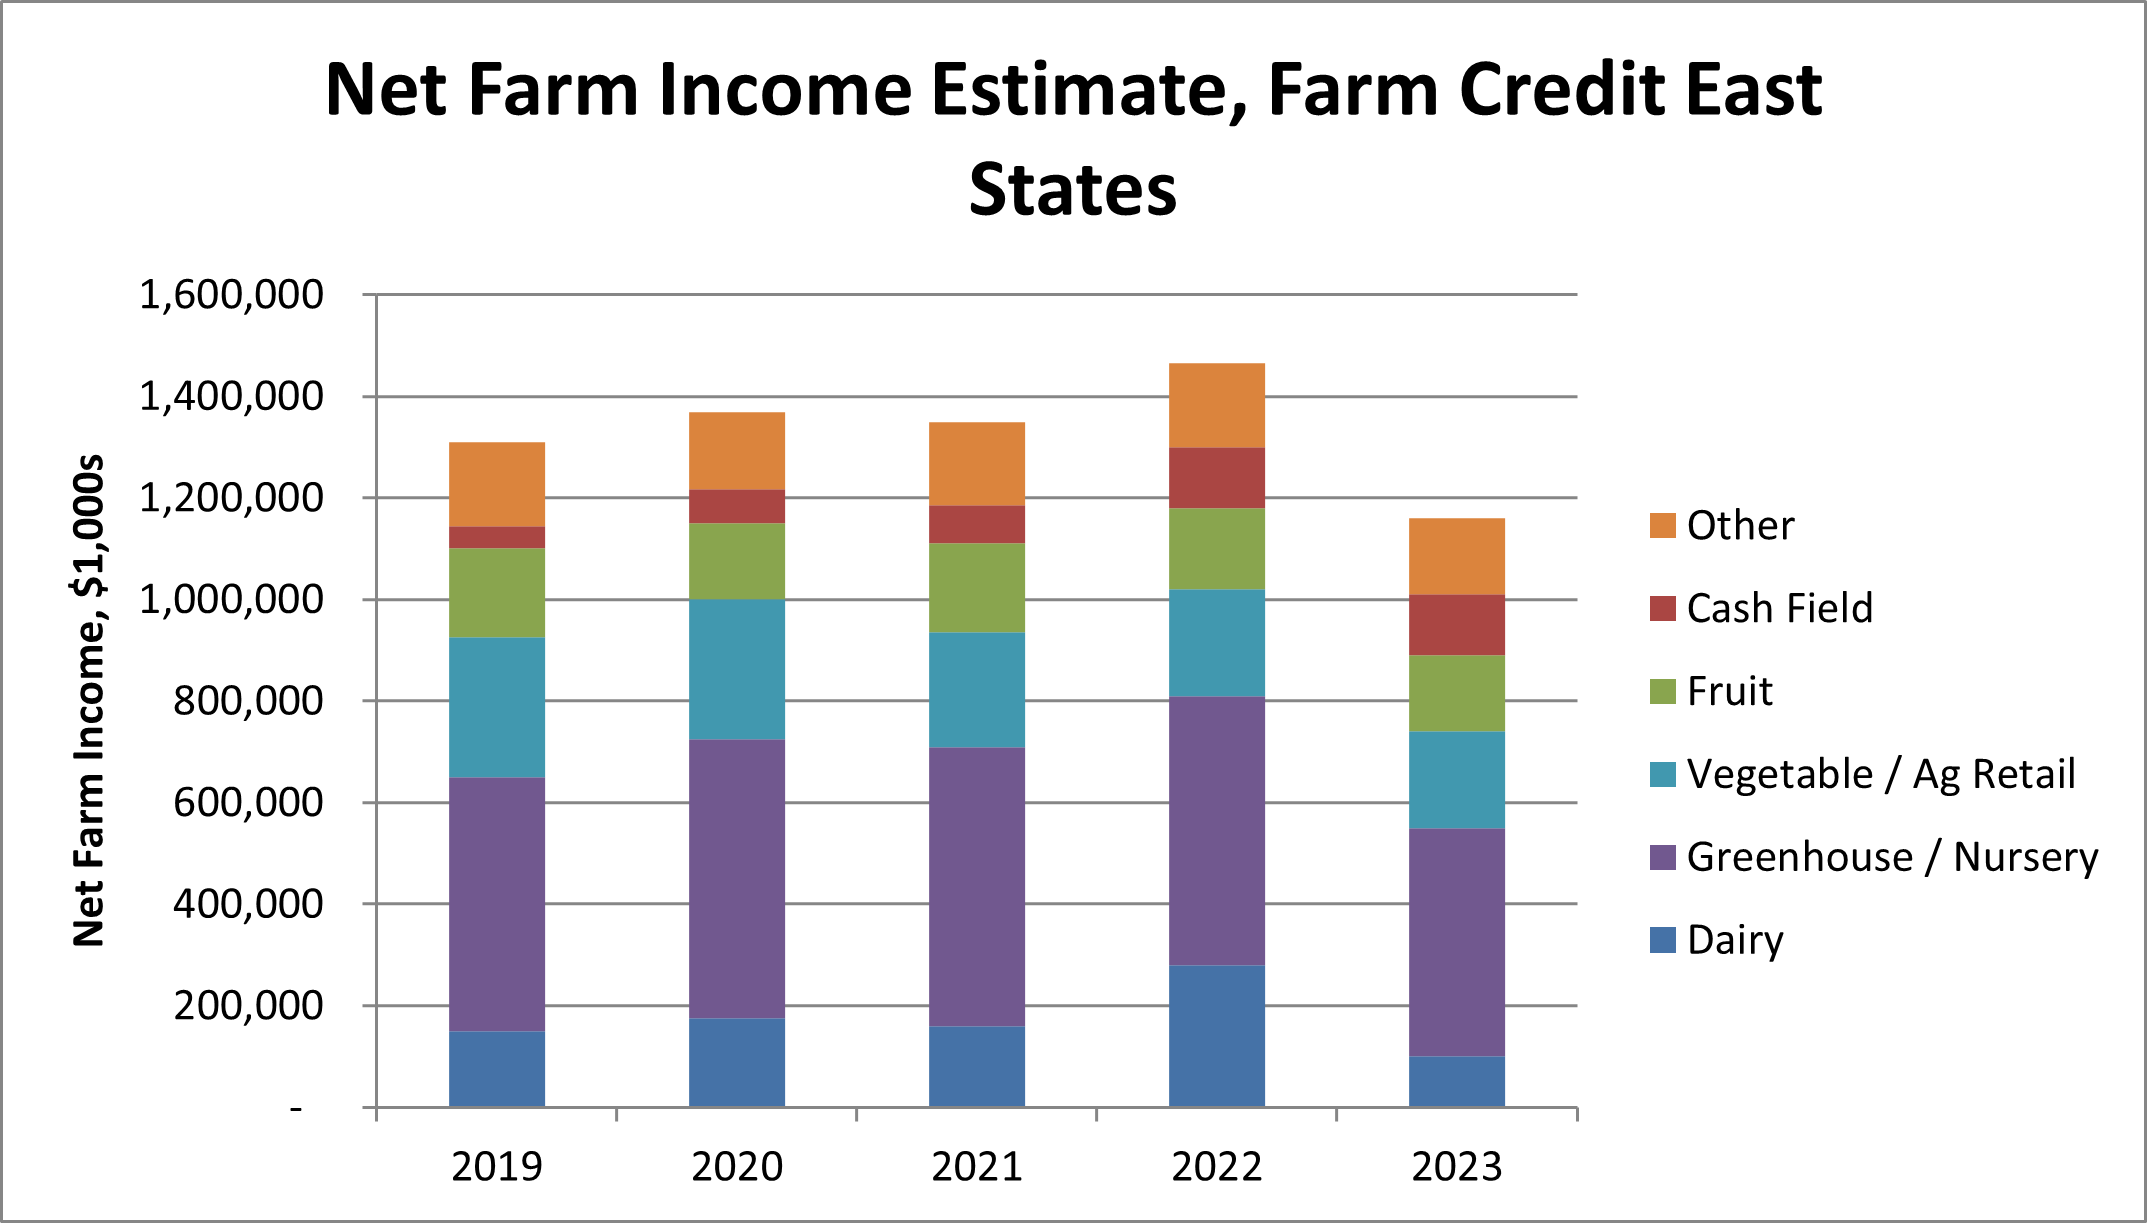 Net Farm Income Estimate, Farm Credit East States bar graph